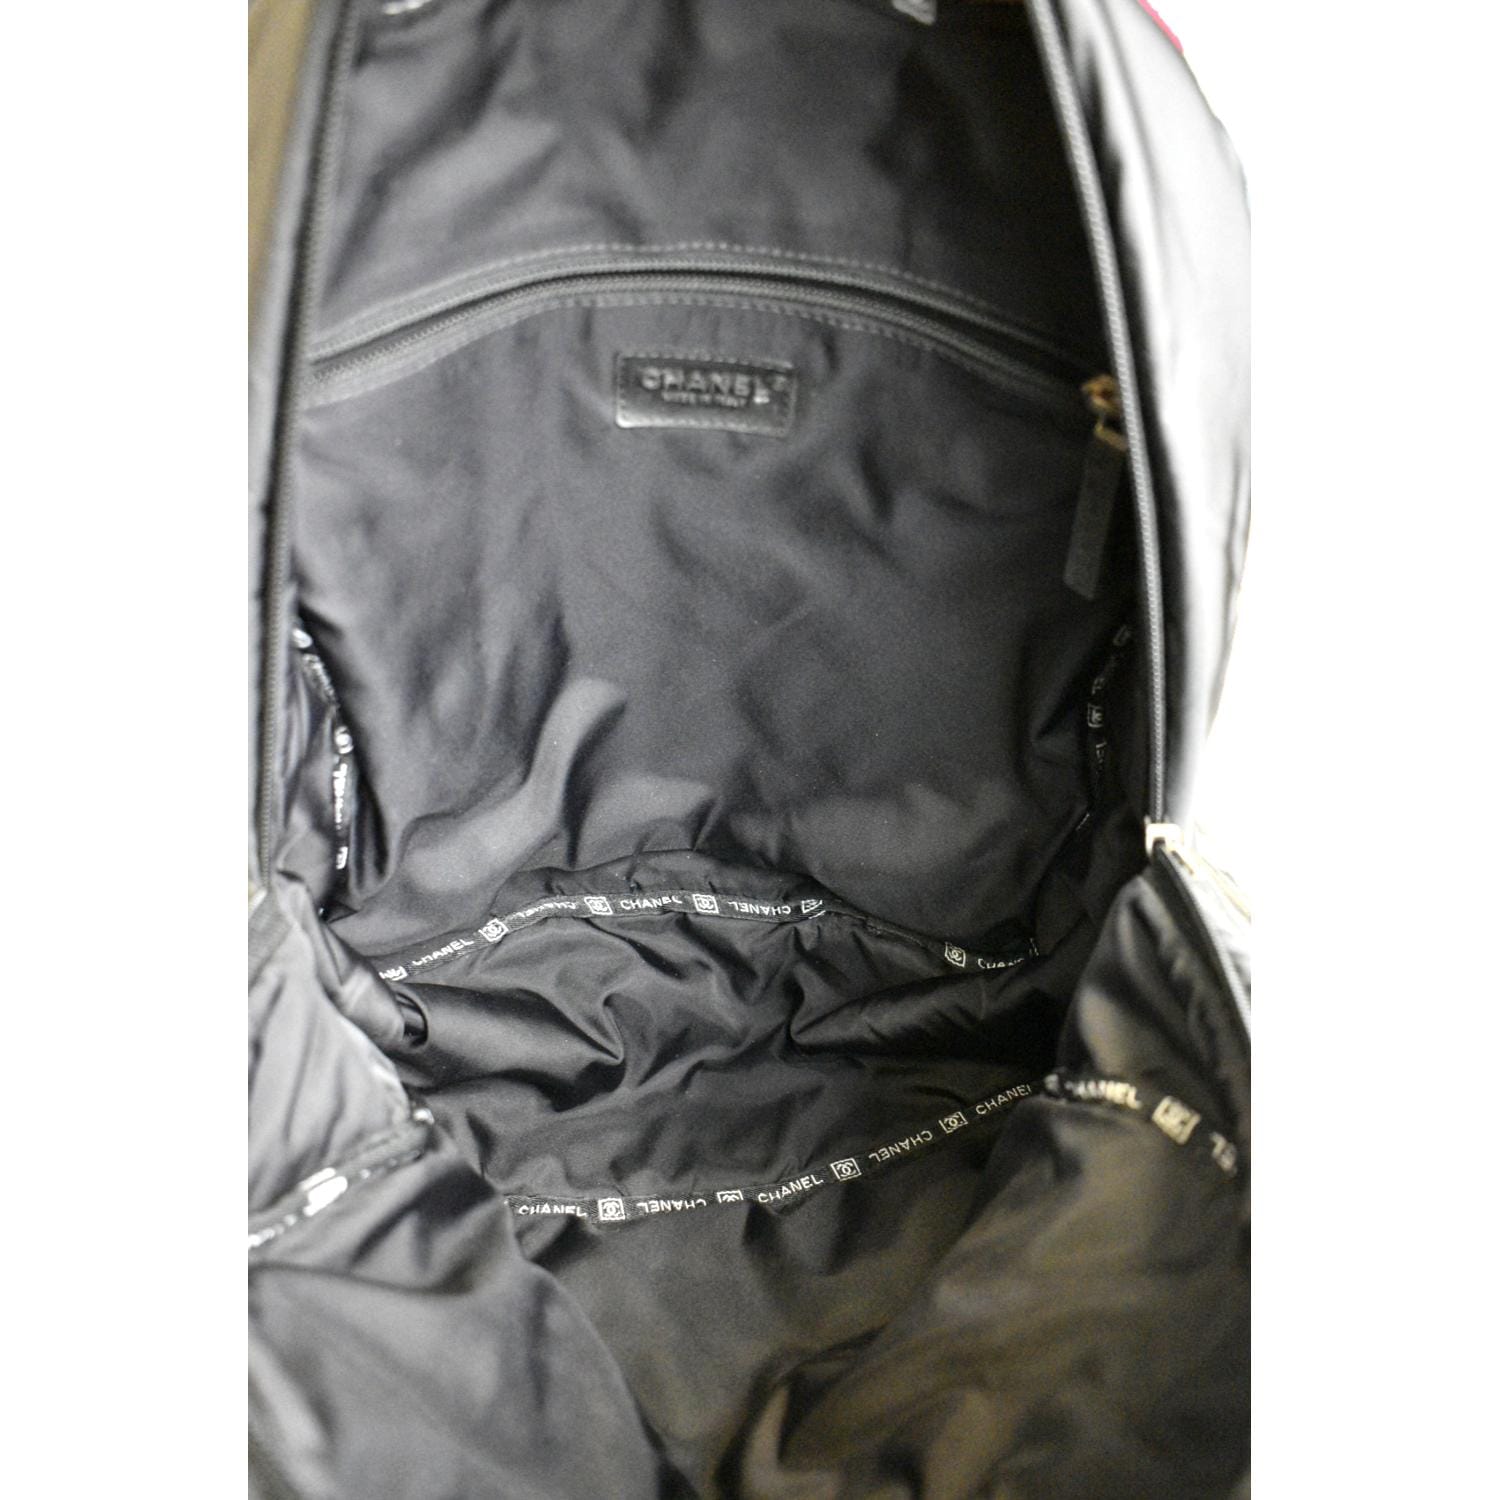 CHANEL Rucksack Sports Line Nylon Backpack Bag Black